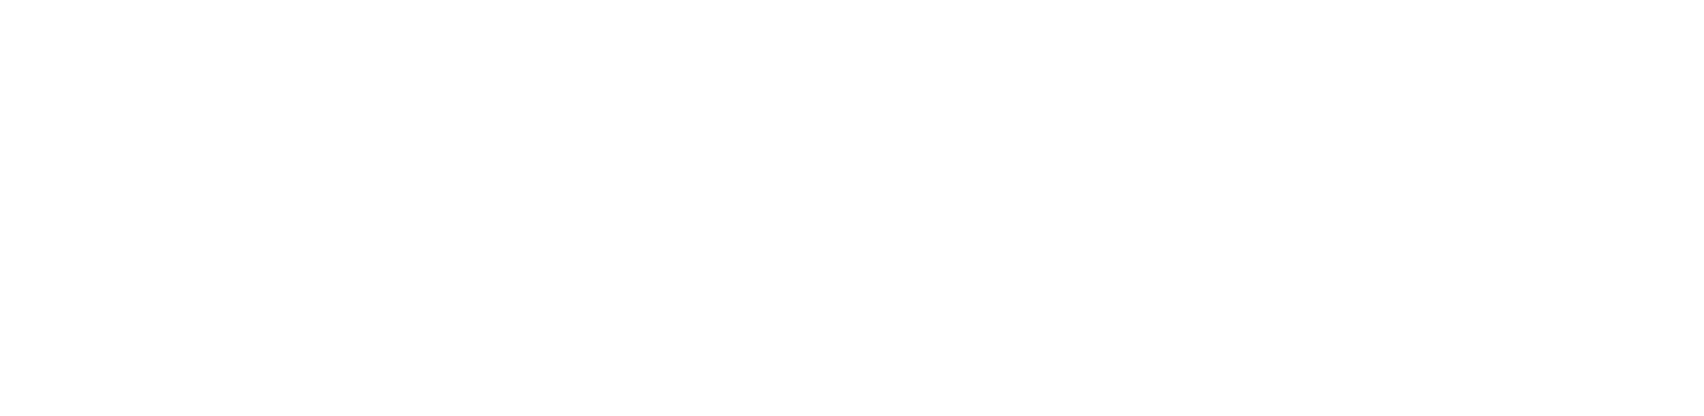 Financial Management, Inc